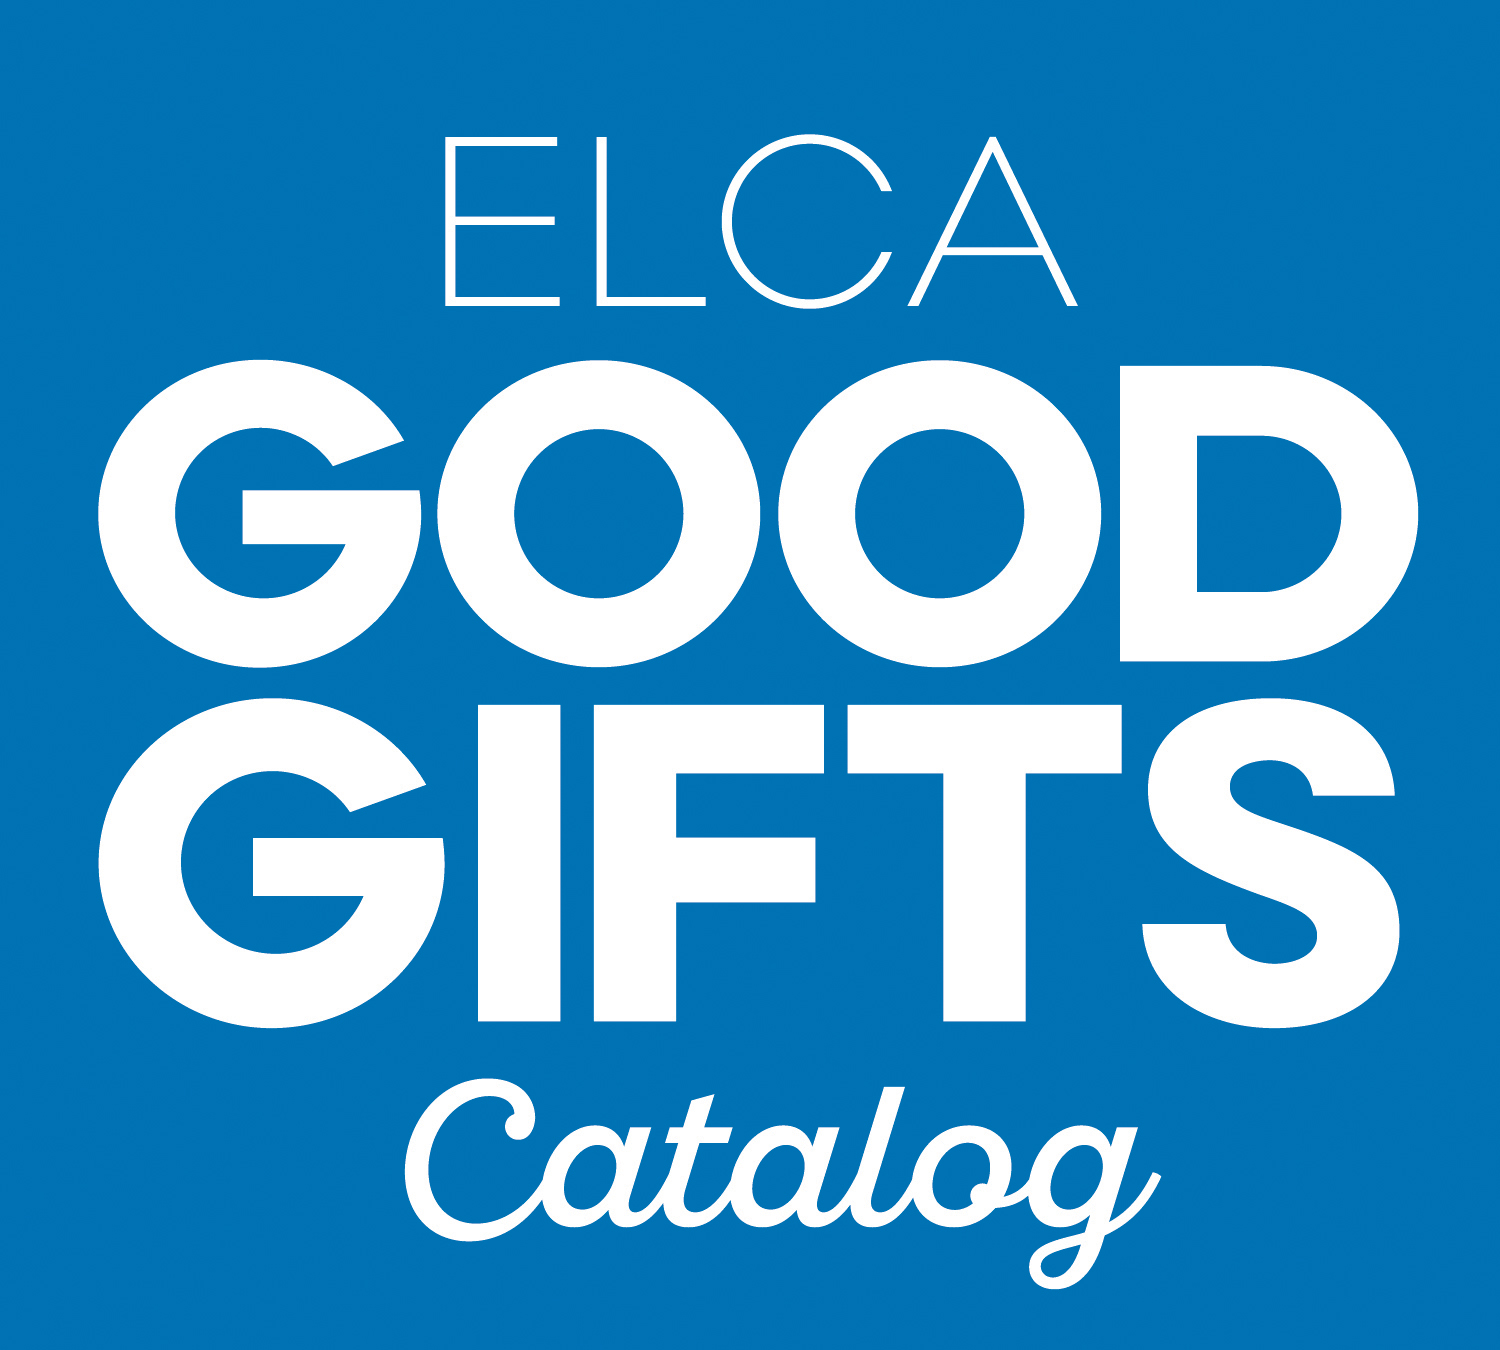 ELCA Good Gifts